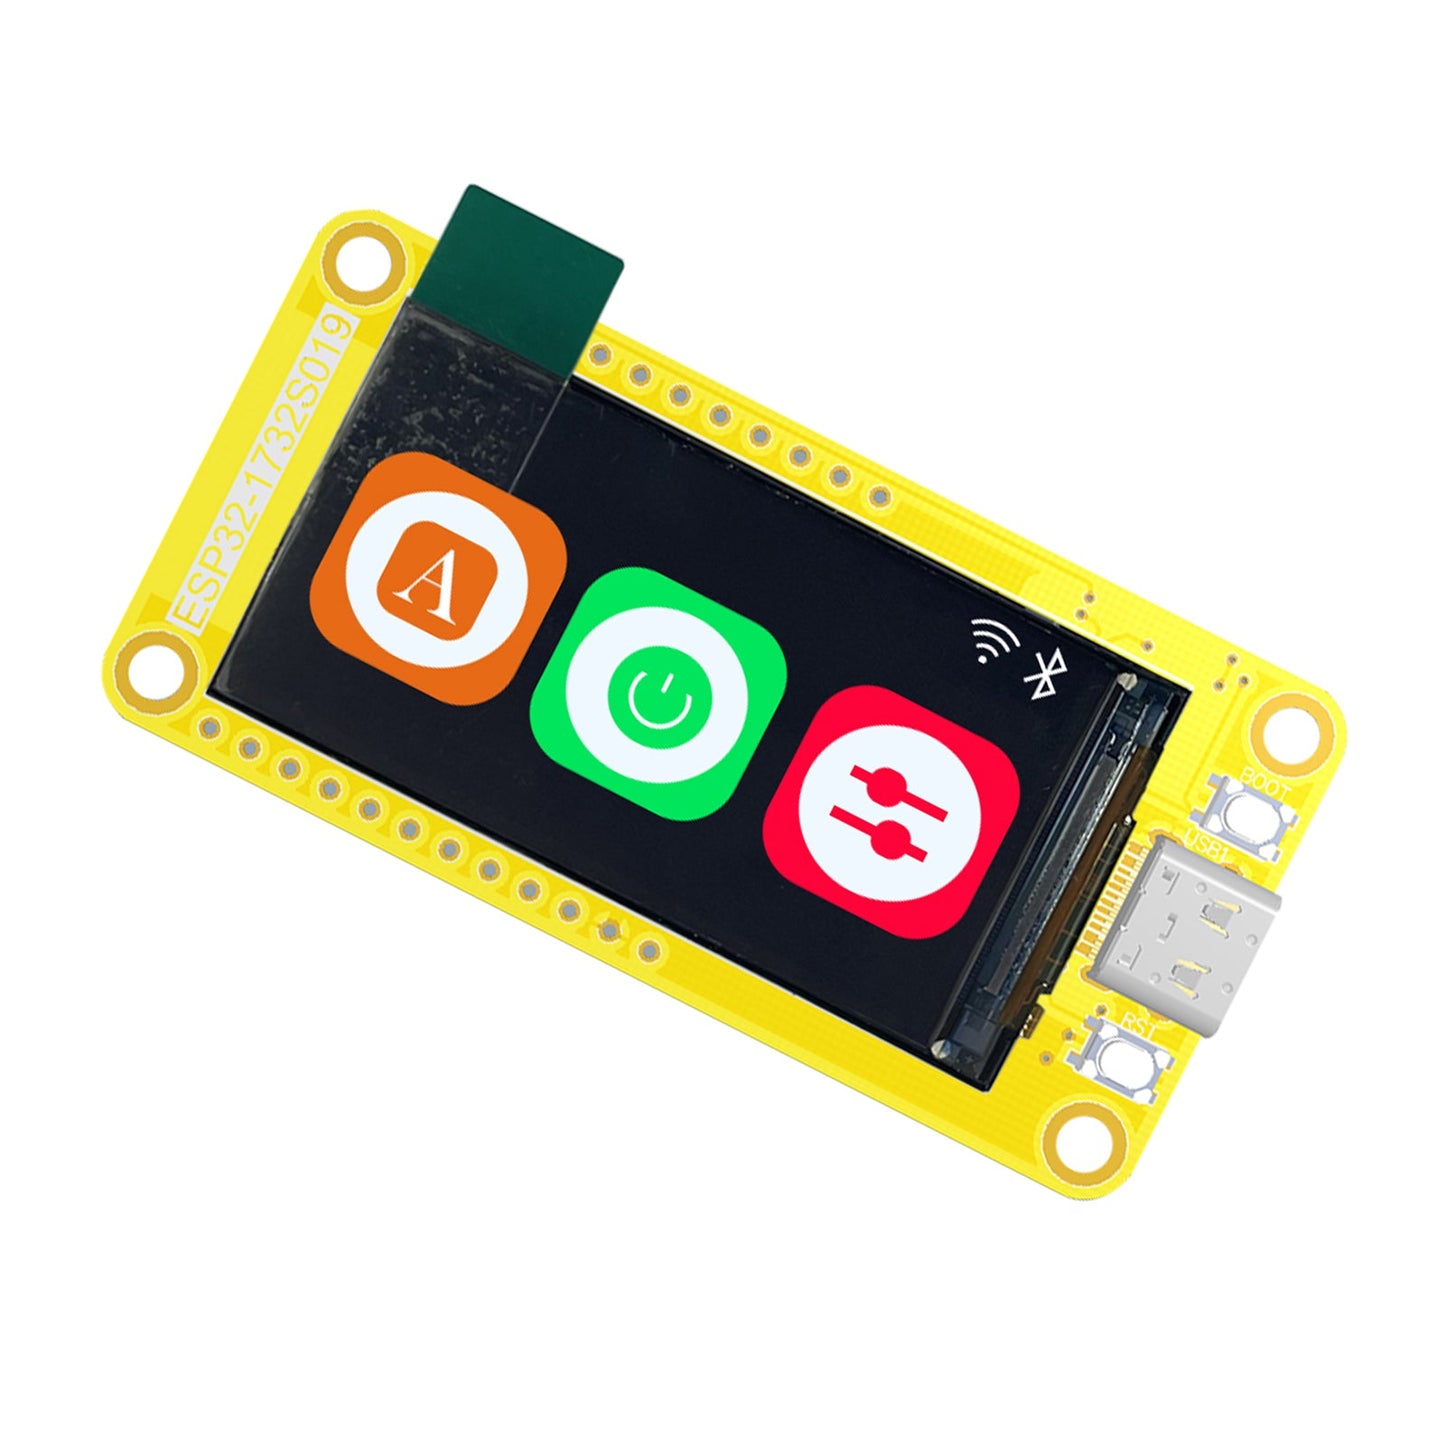 ESP32-S3 1.9" Screen Development Board Wifi Bluetooth 170*320 Display TFT Module